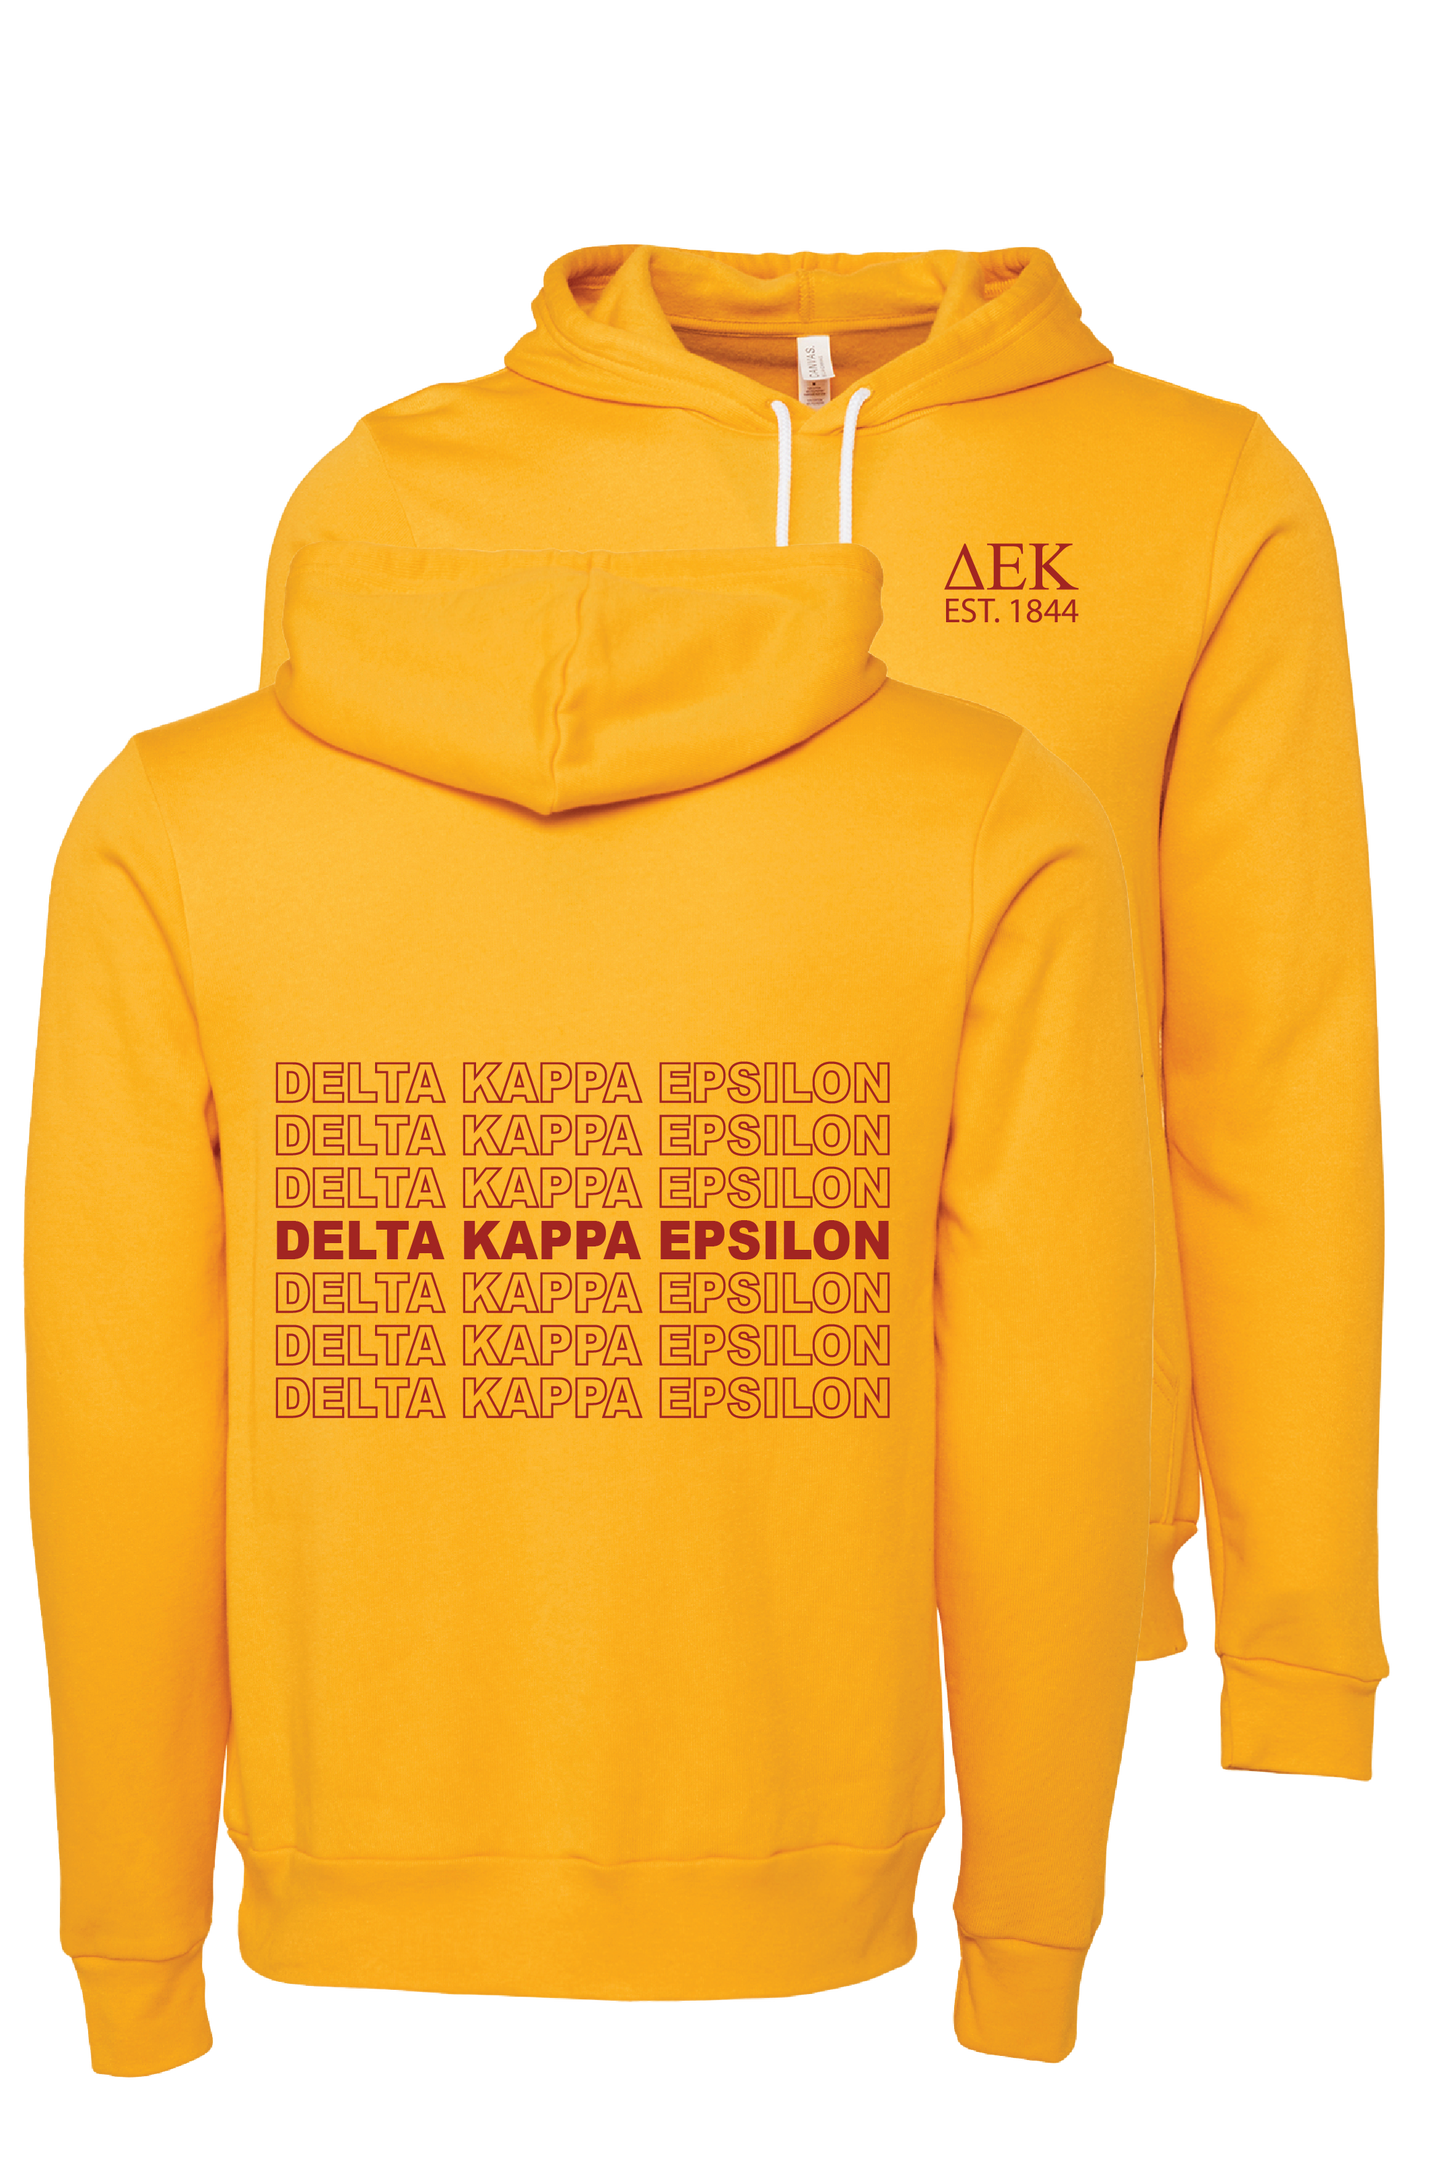 Delta Kappa Epsilon Repeating Name Hooded Sweatshirts